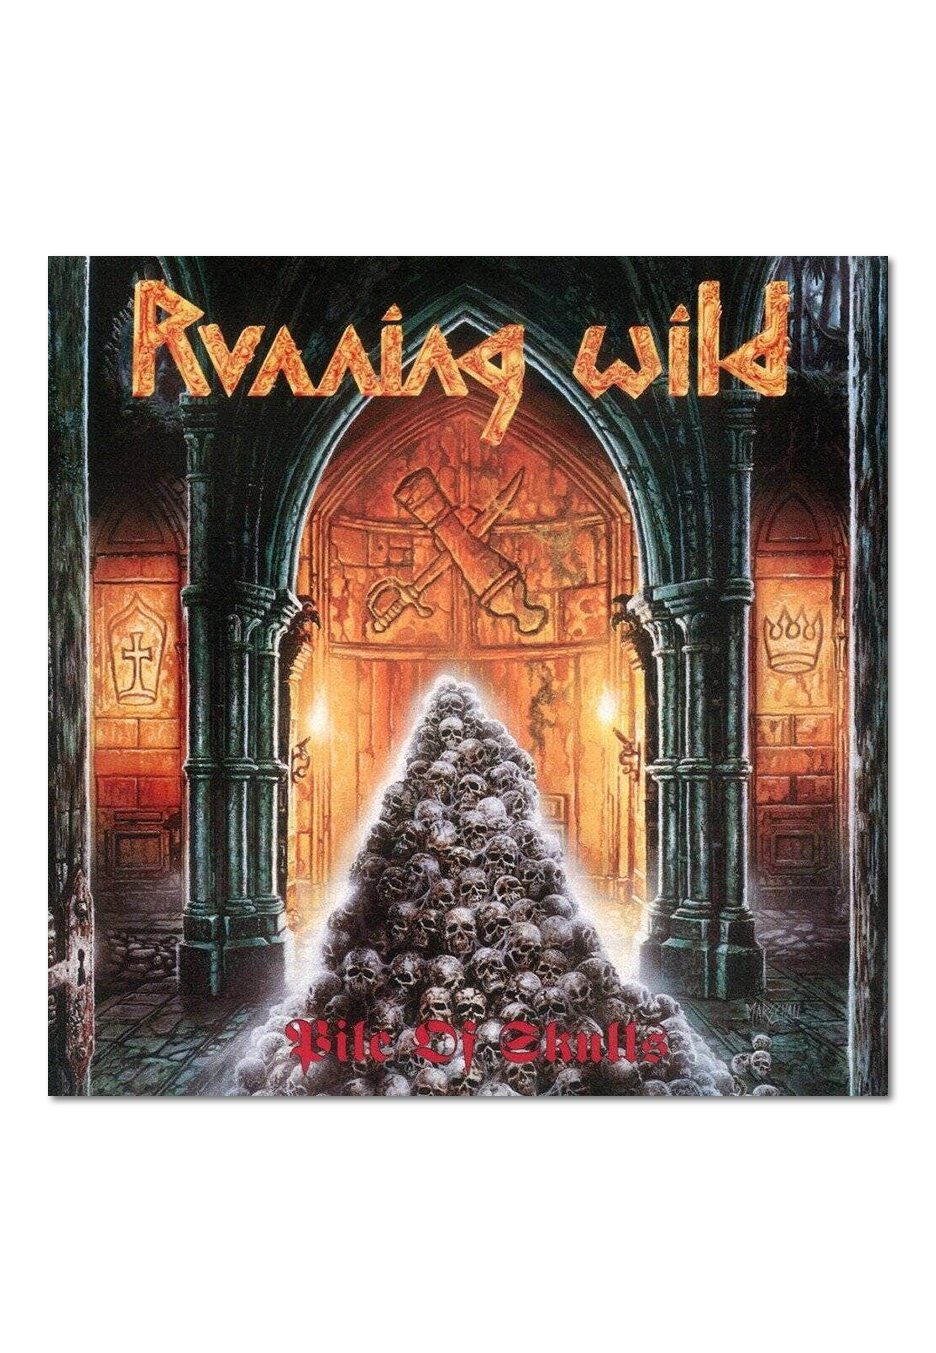 Running Wild - Pile Of Skulls Remastered - Digipak 2 CD